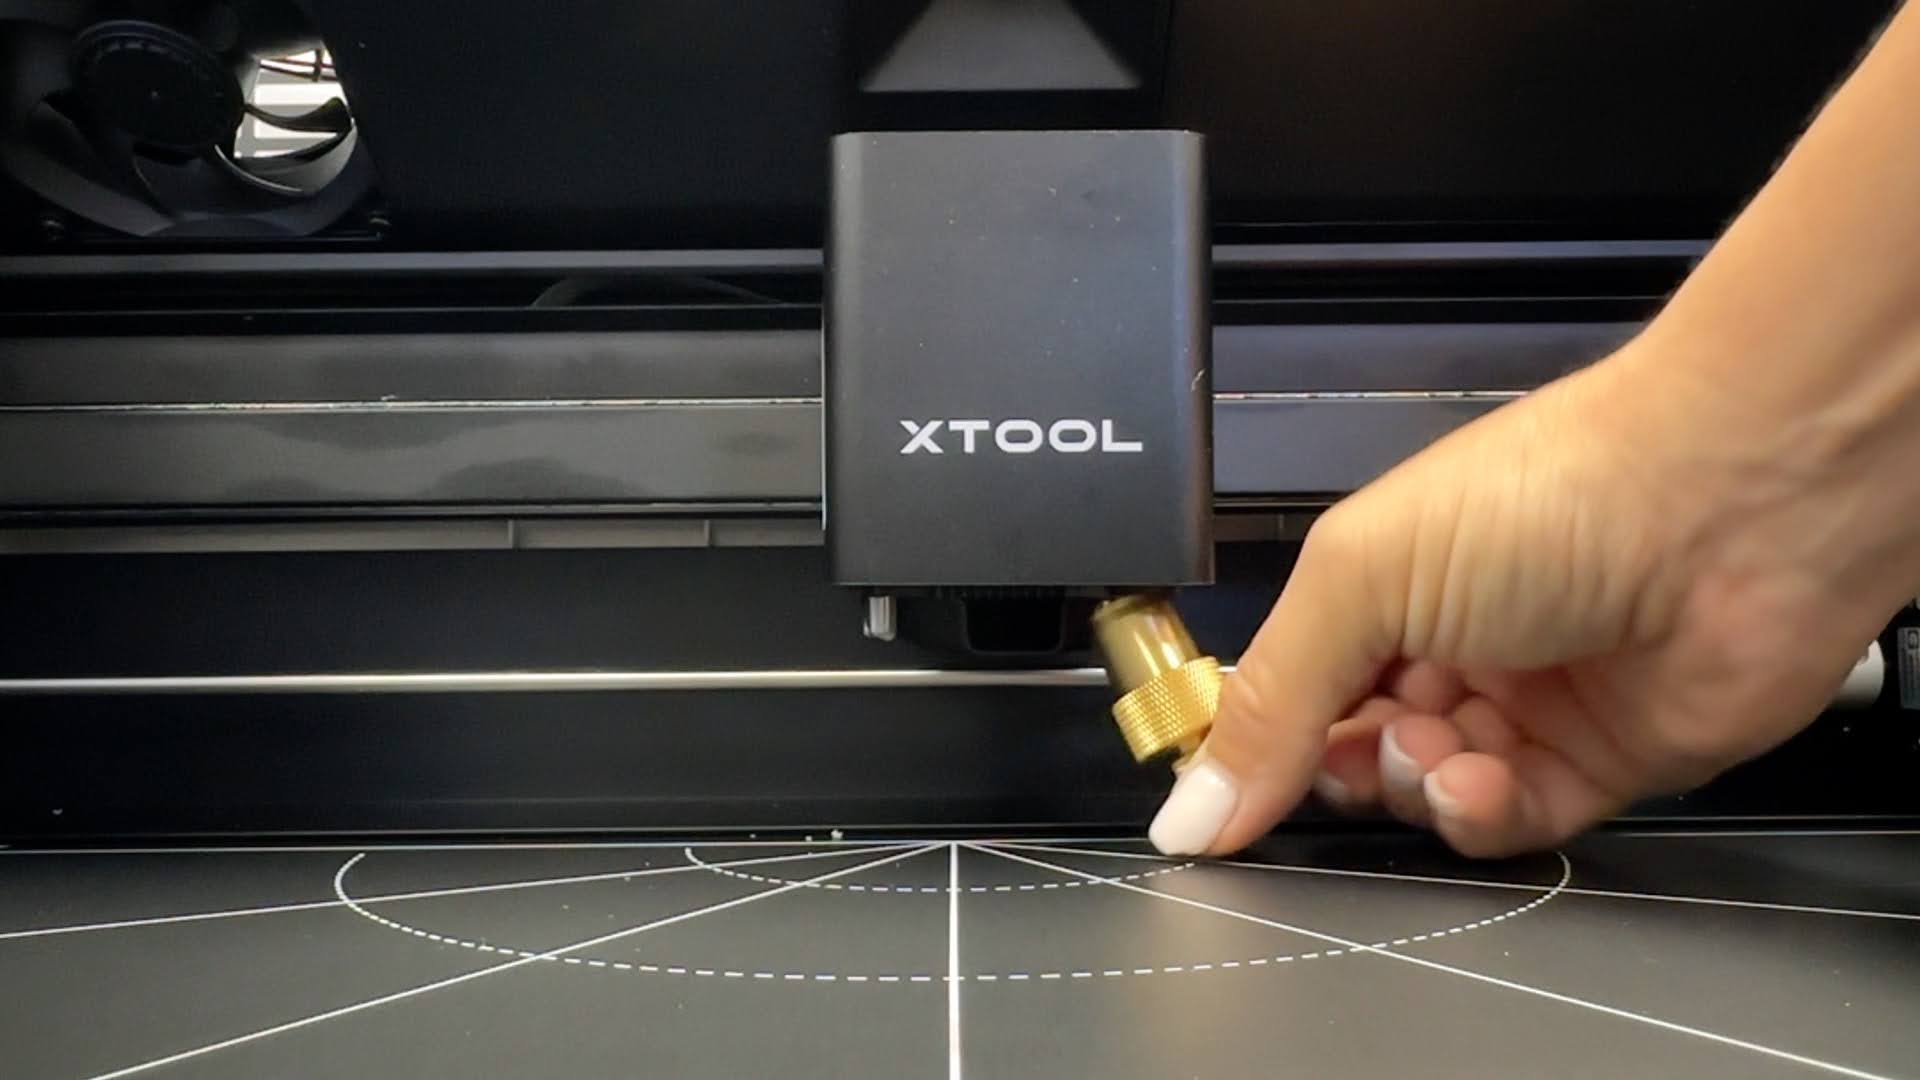 Walkthrough: xTool M1 Set Up - Cutting for Business